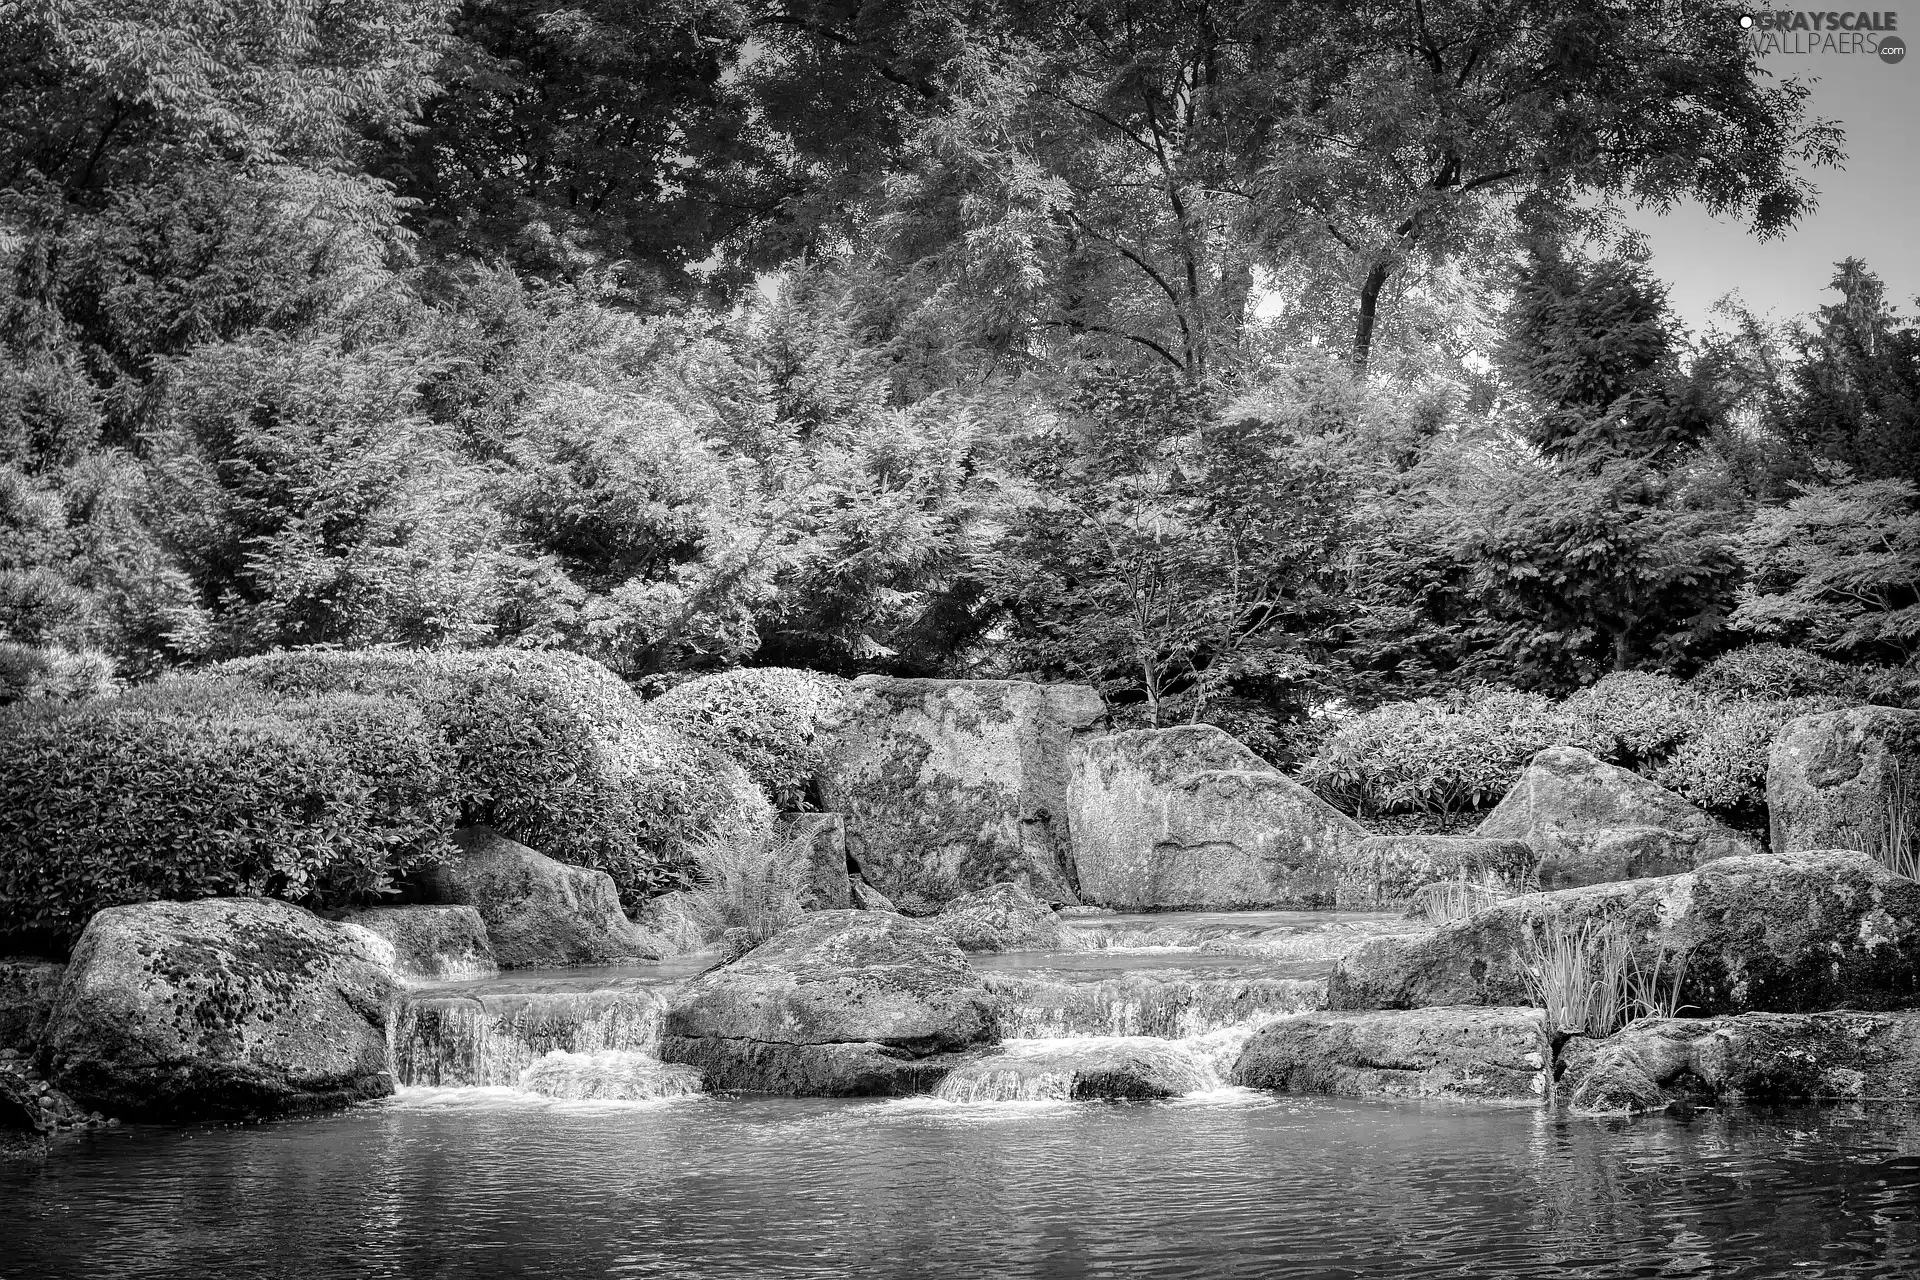 boulders, stream, viewes, Stones, Japanese Garden, trees, Bush